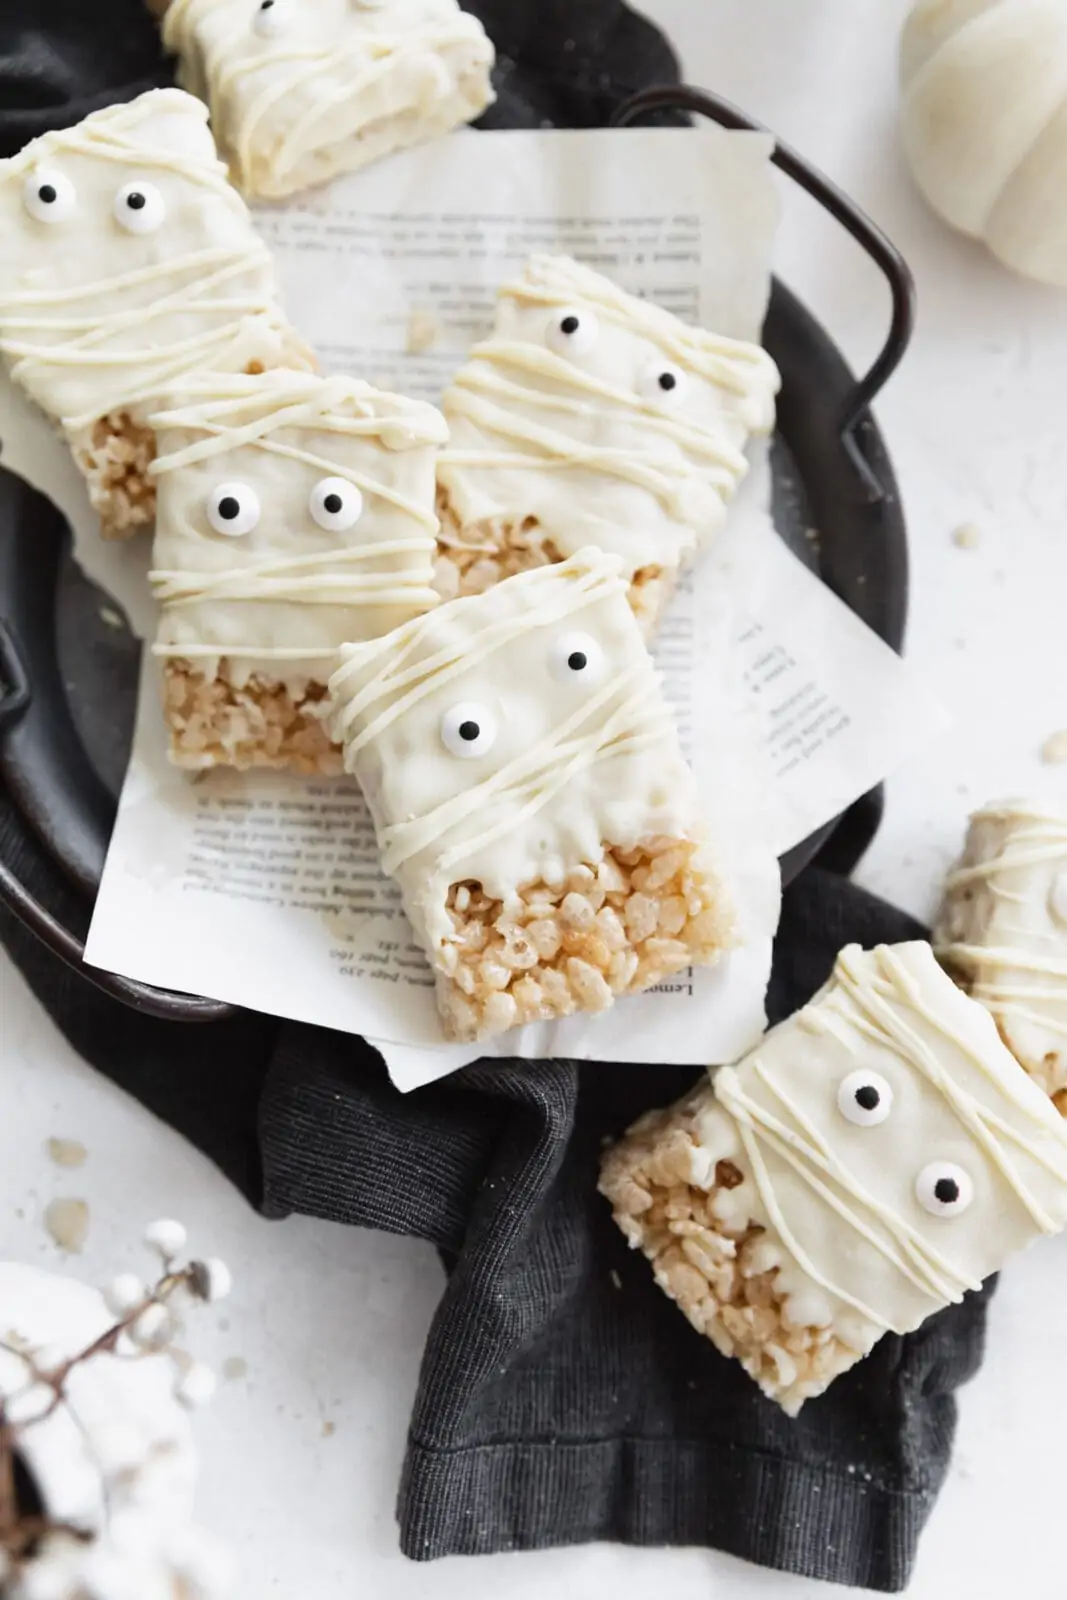 mummy rice krispie treats with googly eyes